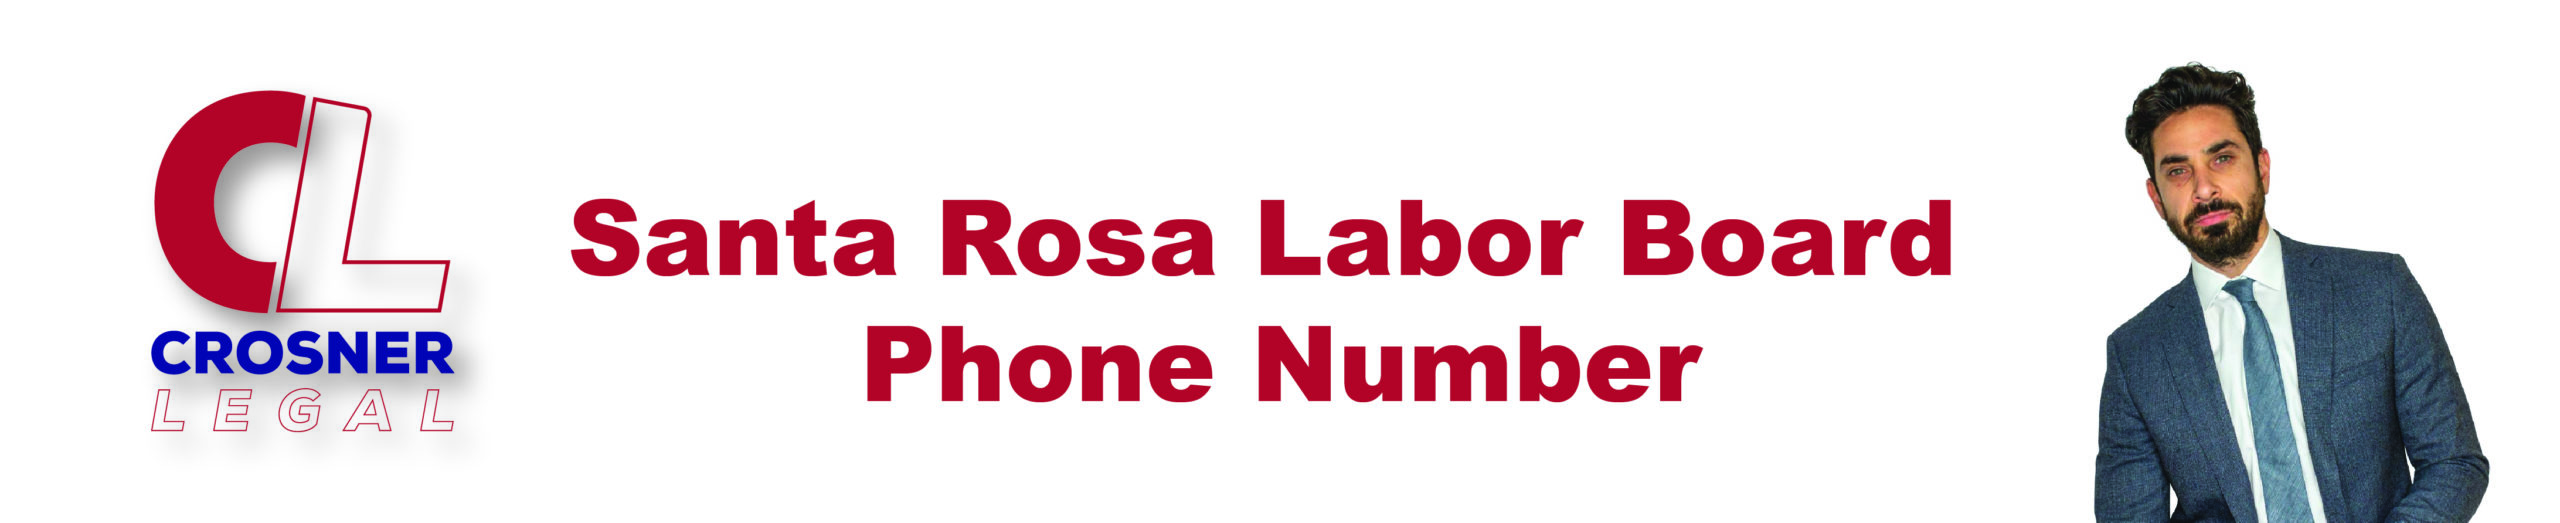 Santa Rosa Labor Board Phone Number